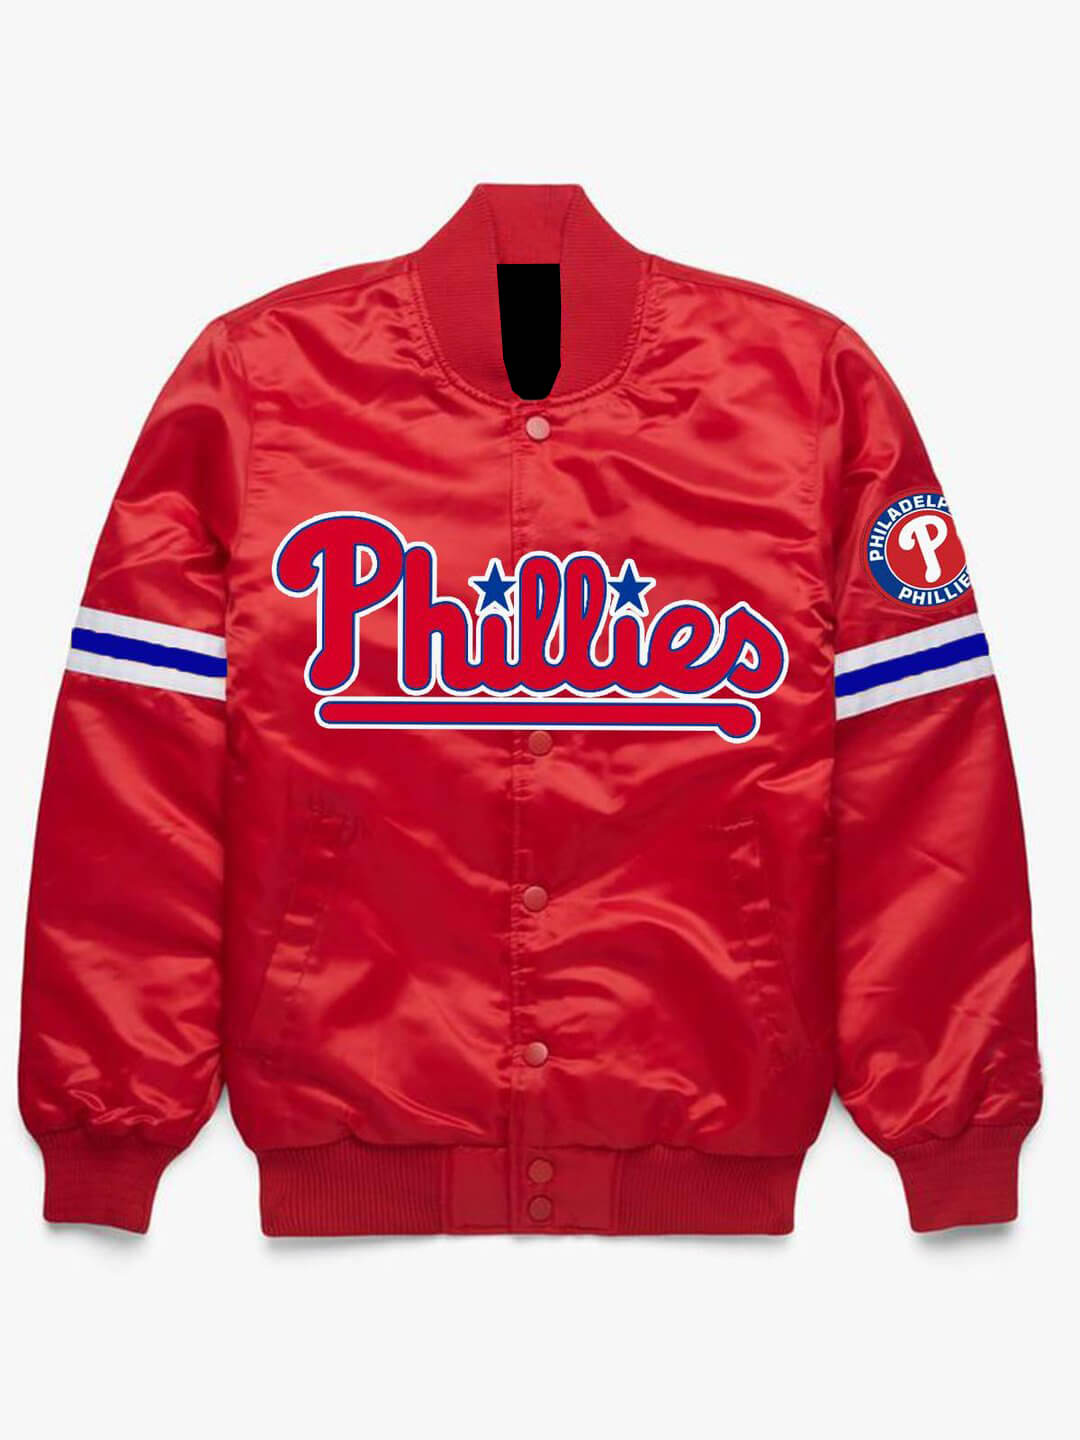 Maker of Jacket Sports Leagues Jackets MLB Team Philadelphia Phillies Red Satin